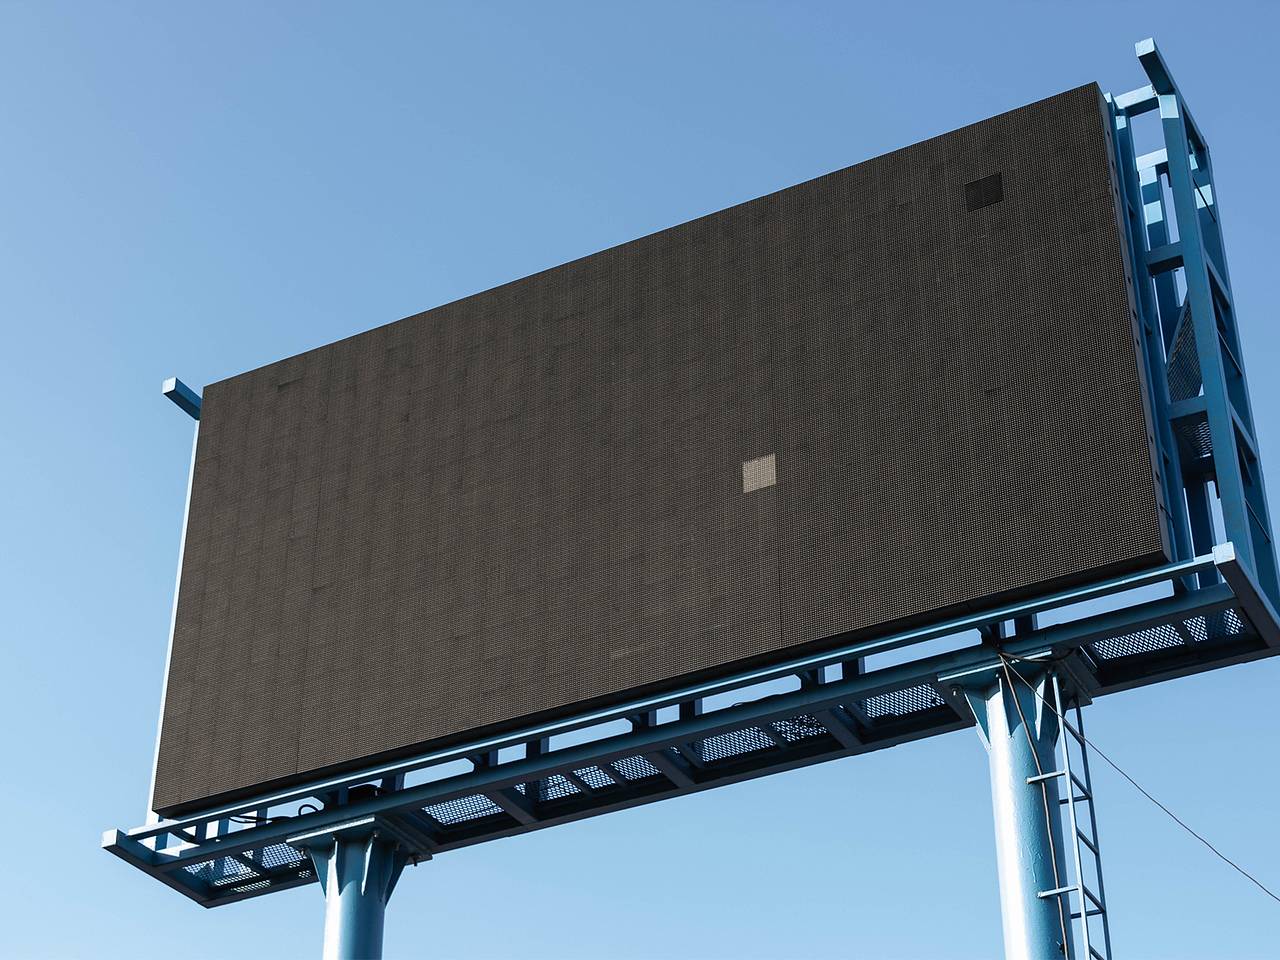 Цифровая наружная реклама на билбордах в Москве - сервис DRON